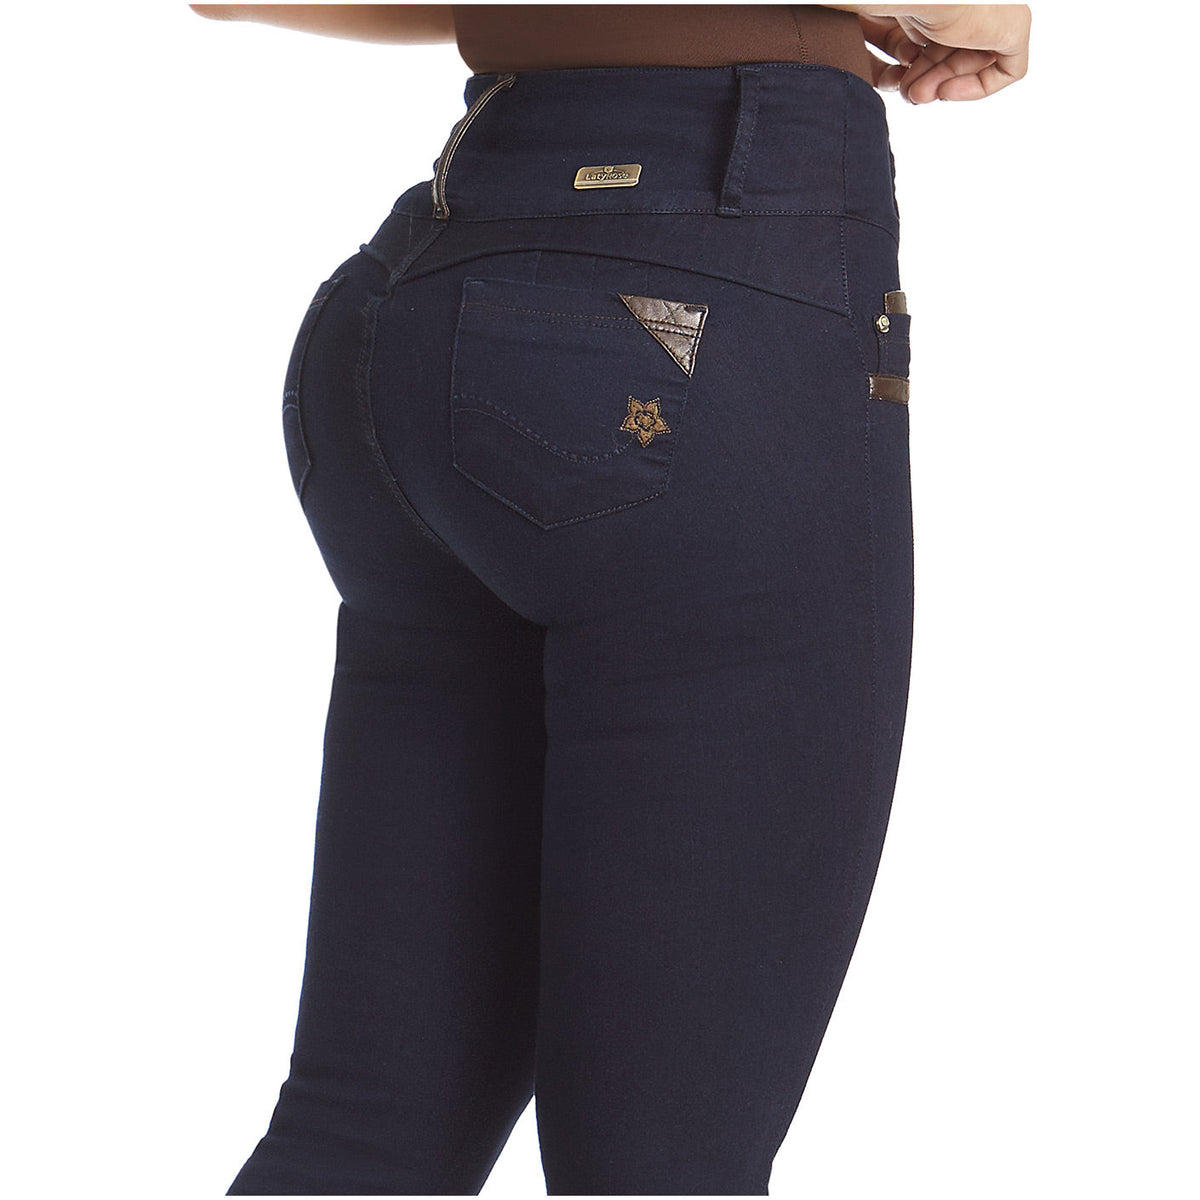 LT.Rose IS3B02 | Jeans ajustados colombianos levanta cola para mujer